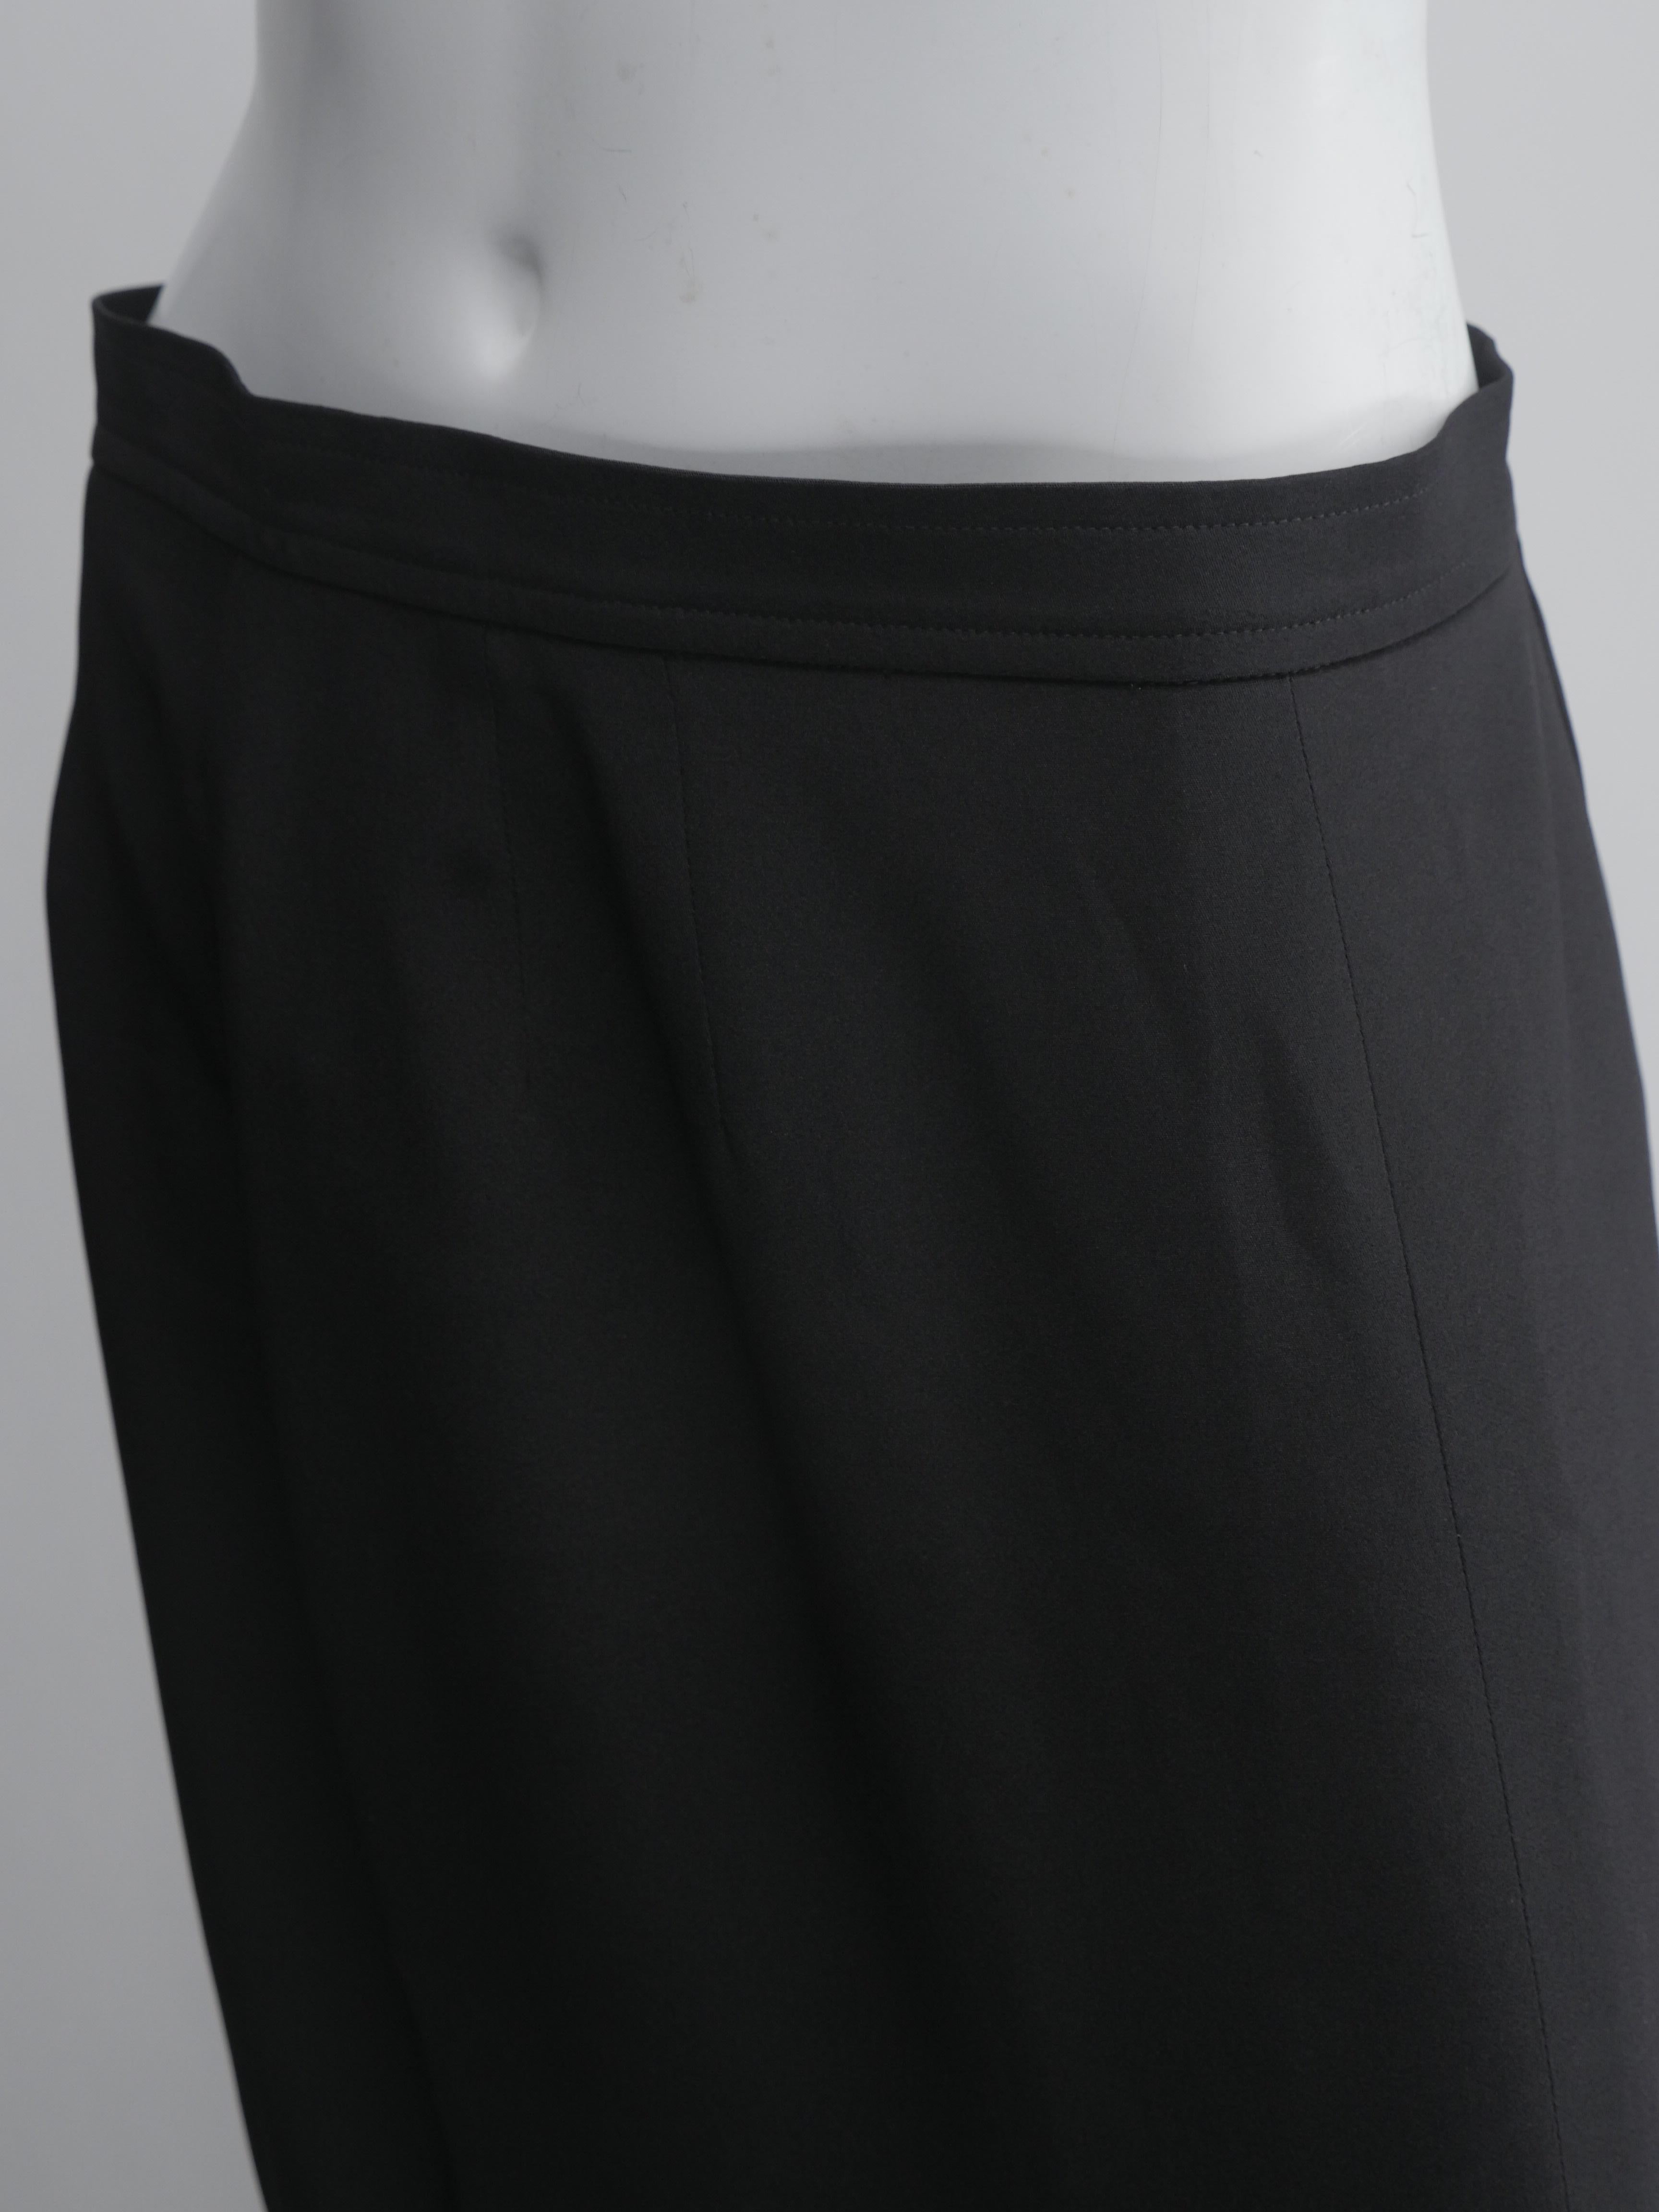 Vintage YSL Black silk Maxi skirt with Large slit